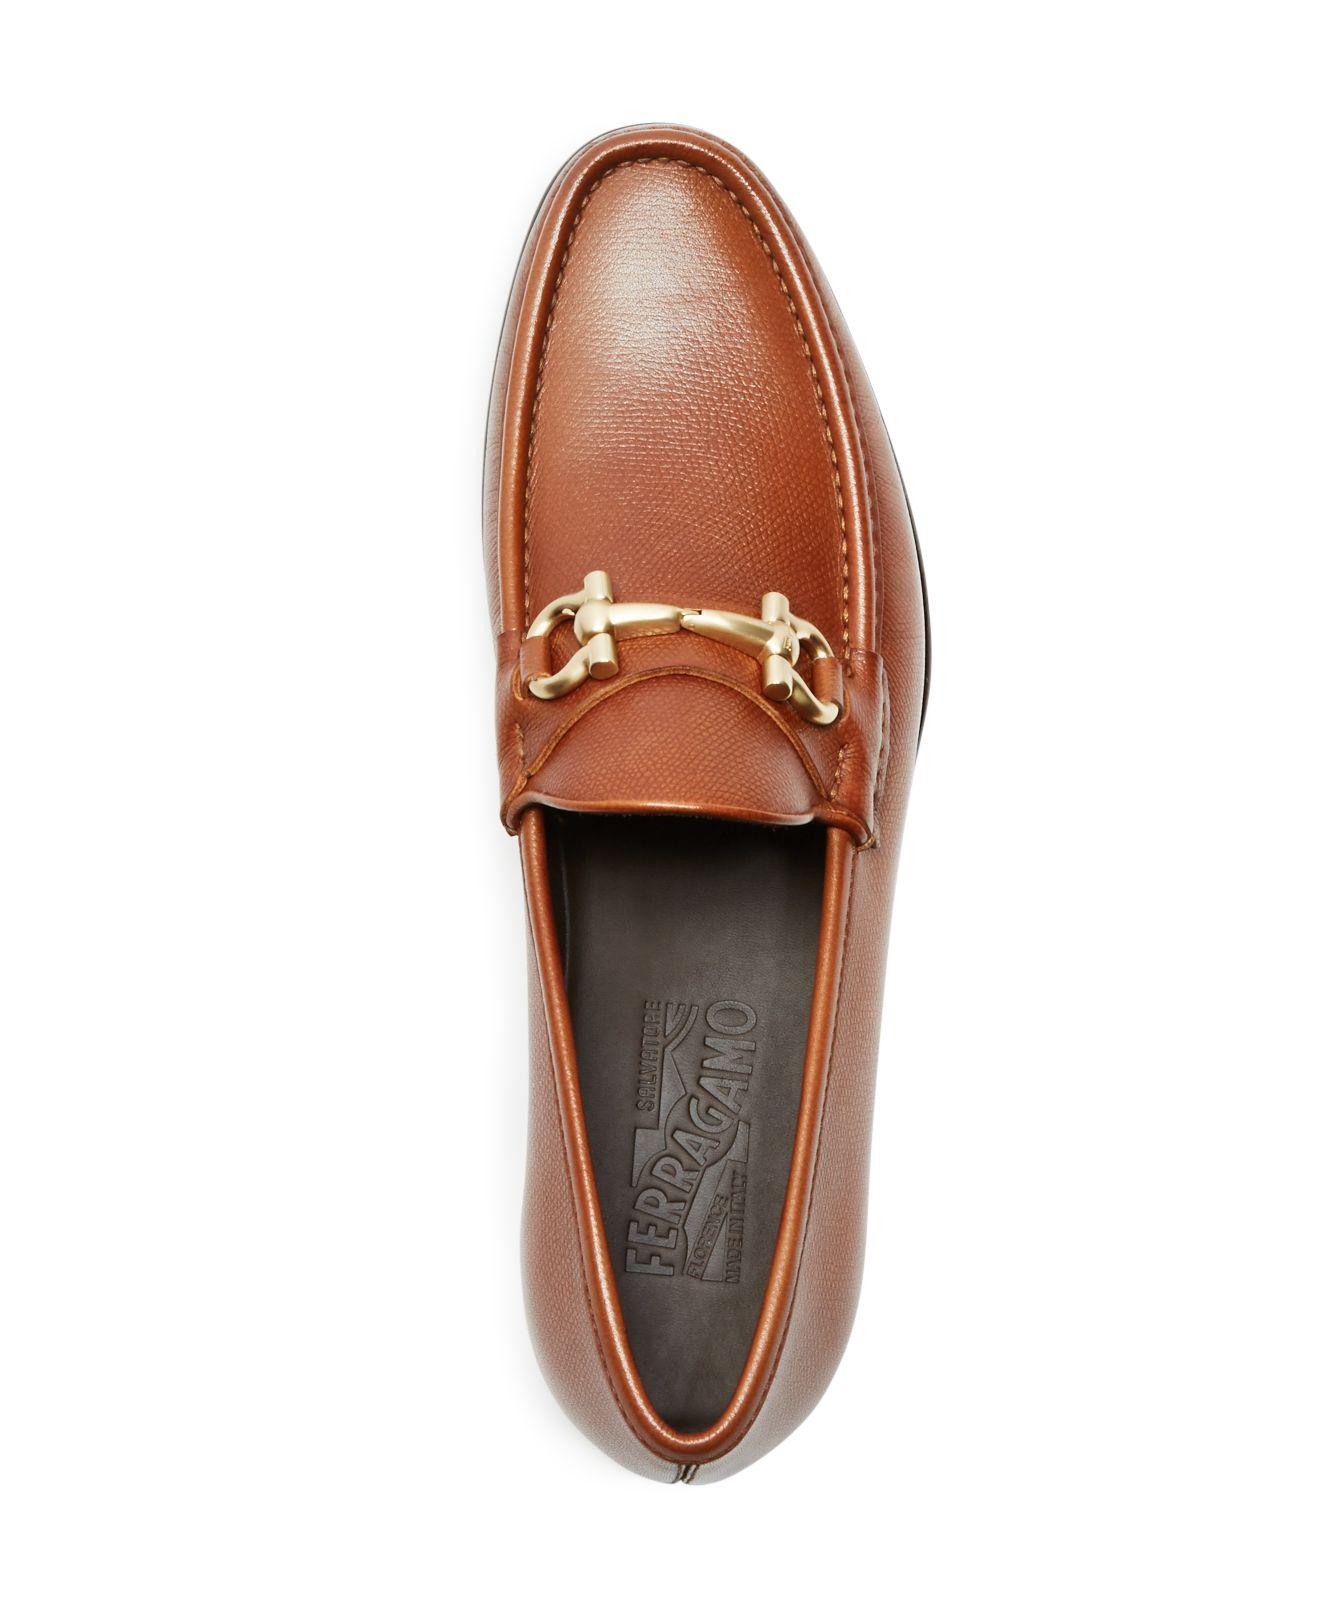 Ferragamo Leather Mason Loafers in Brown for Men - Lyst